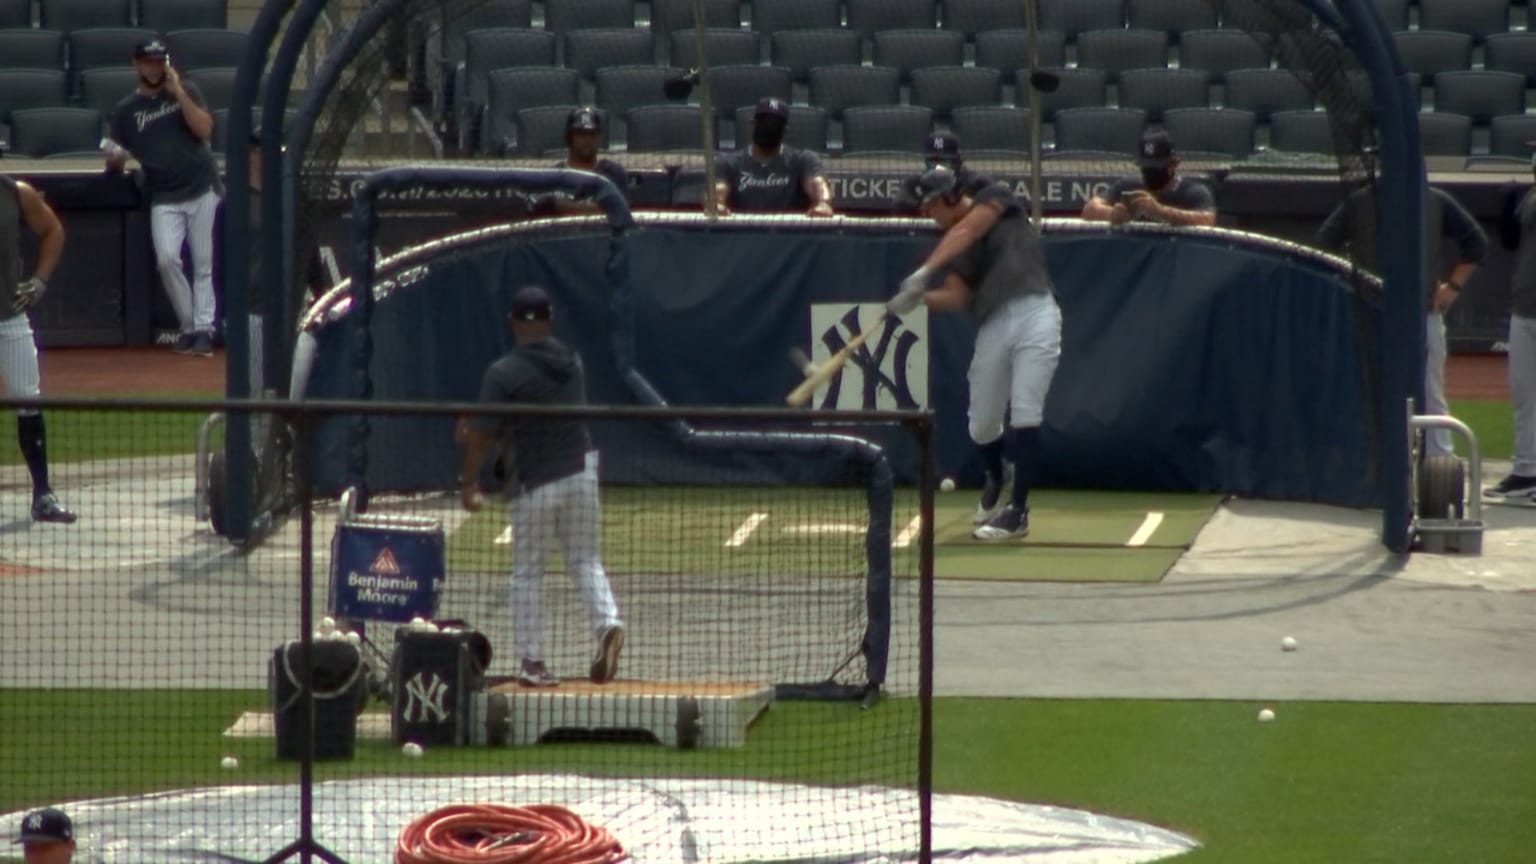 Derek Jeter takes on-field batting practice